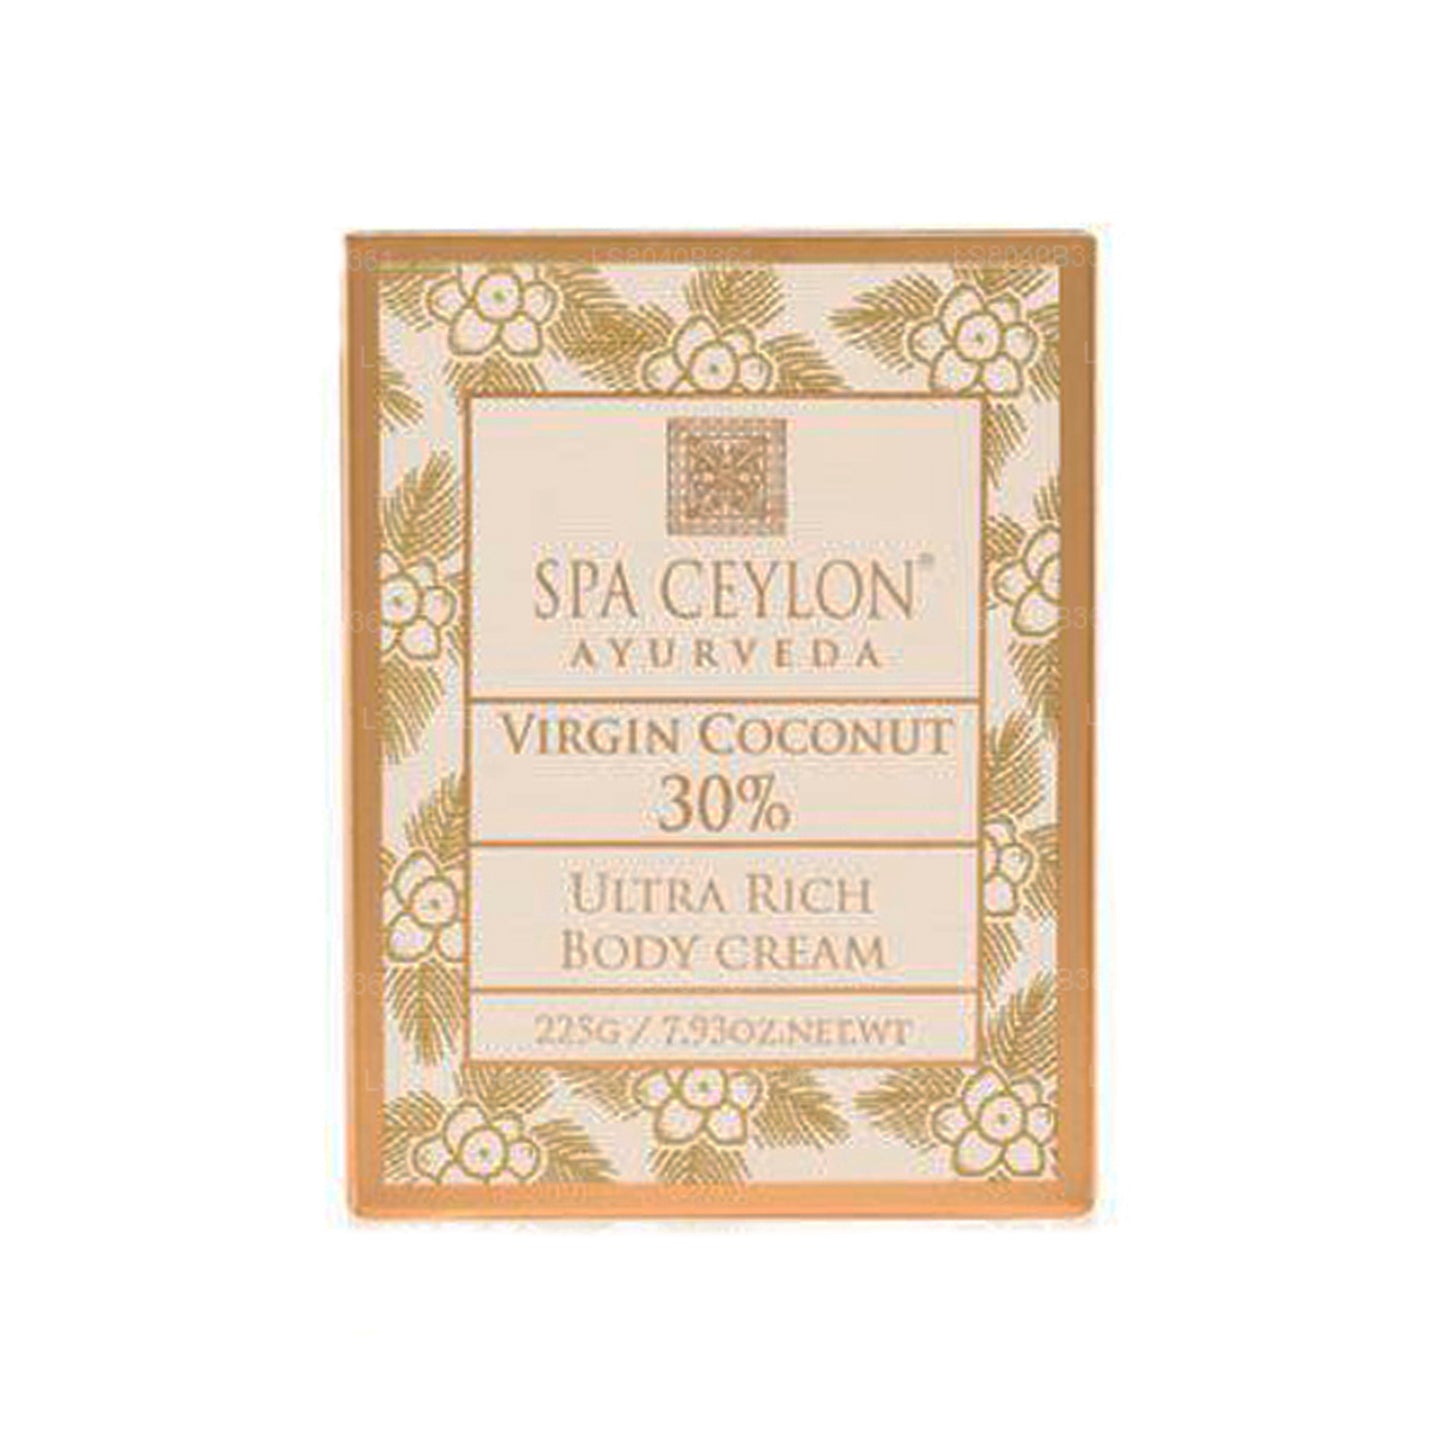 Spa Ceylon Virgin Coconut 30% - Crème pour le corps ultra riche (200g)